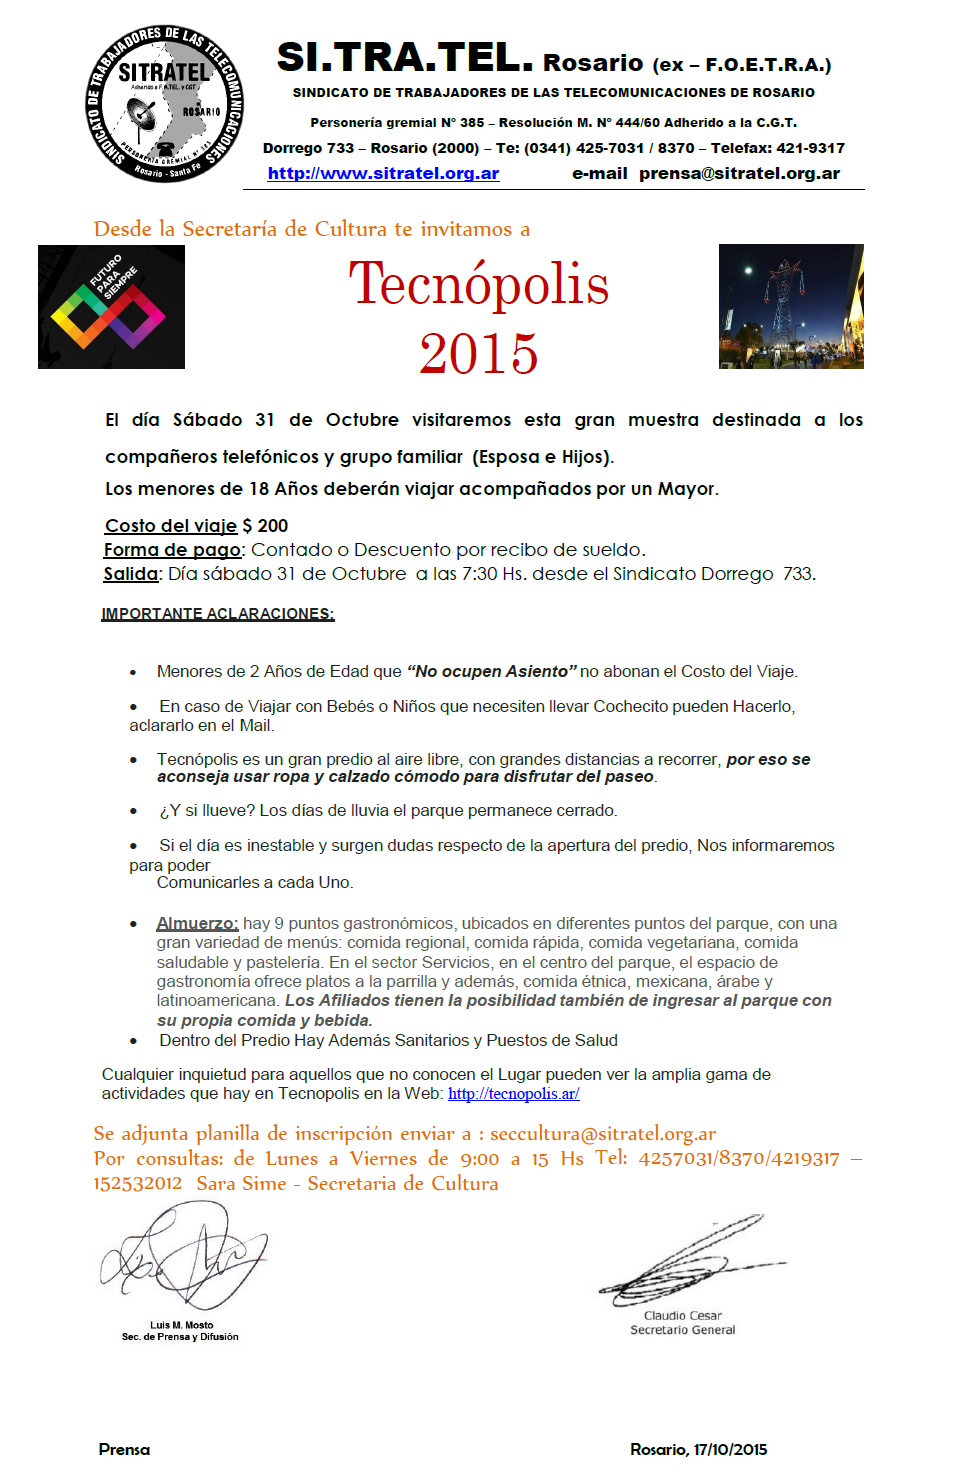 TECNOPOLIS 2015